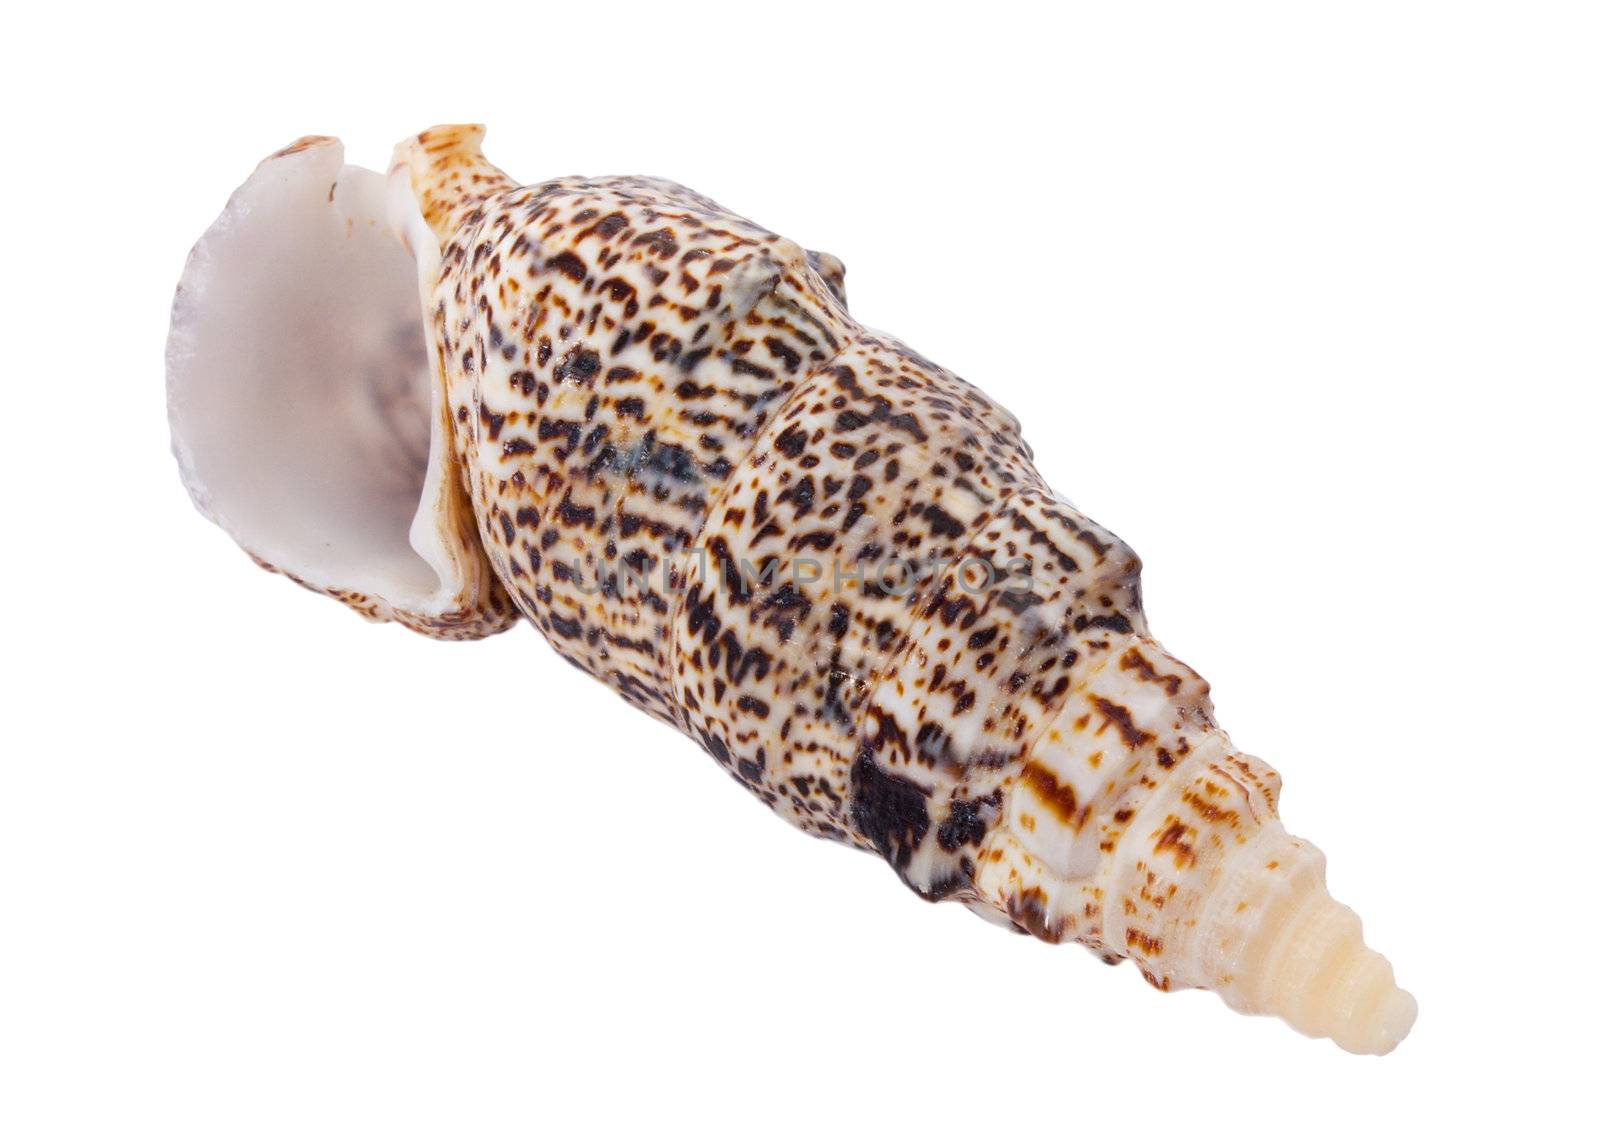 close-up seashell, isolated on white